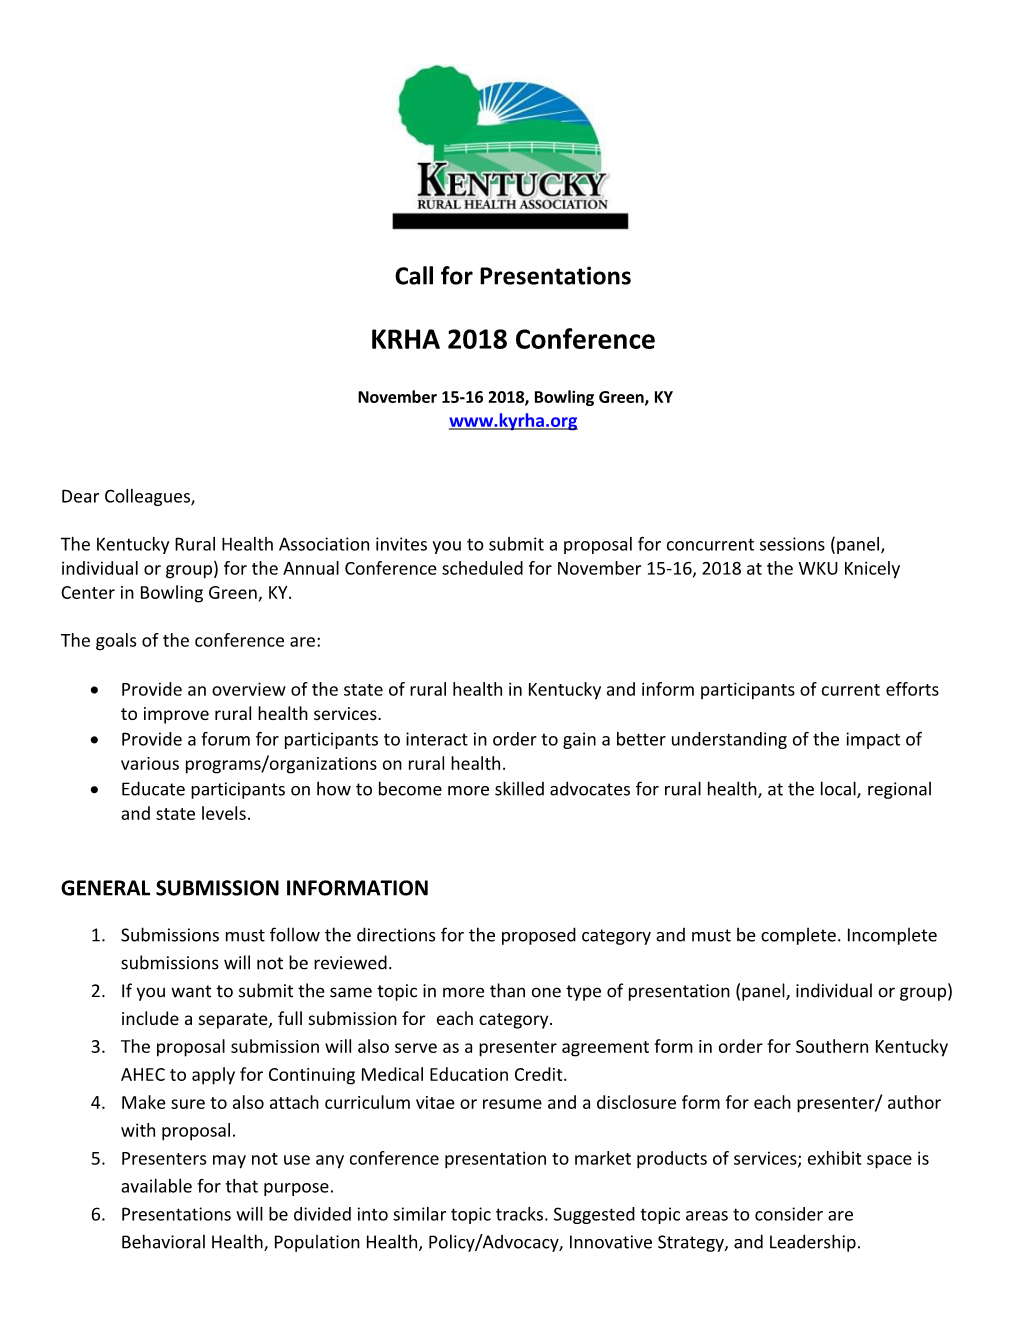 The Kentuckyrural Health Associationinvitesyouto Submit Aproposalforconcurrent